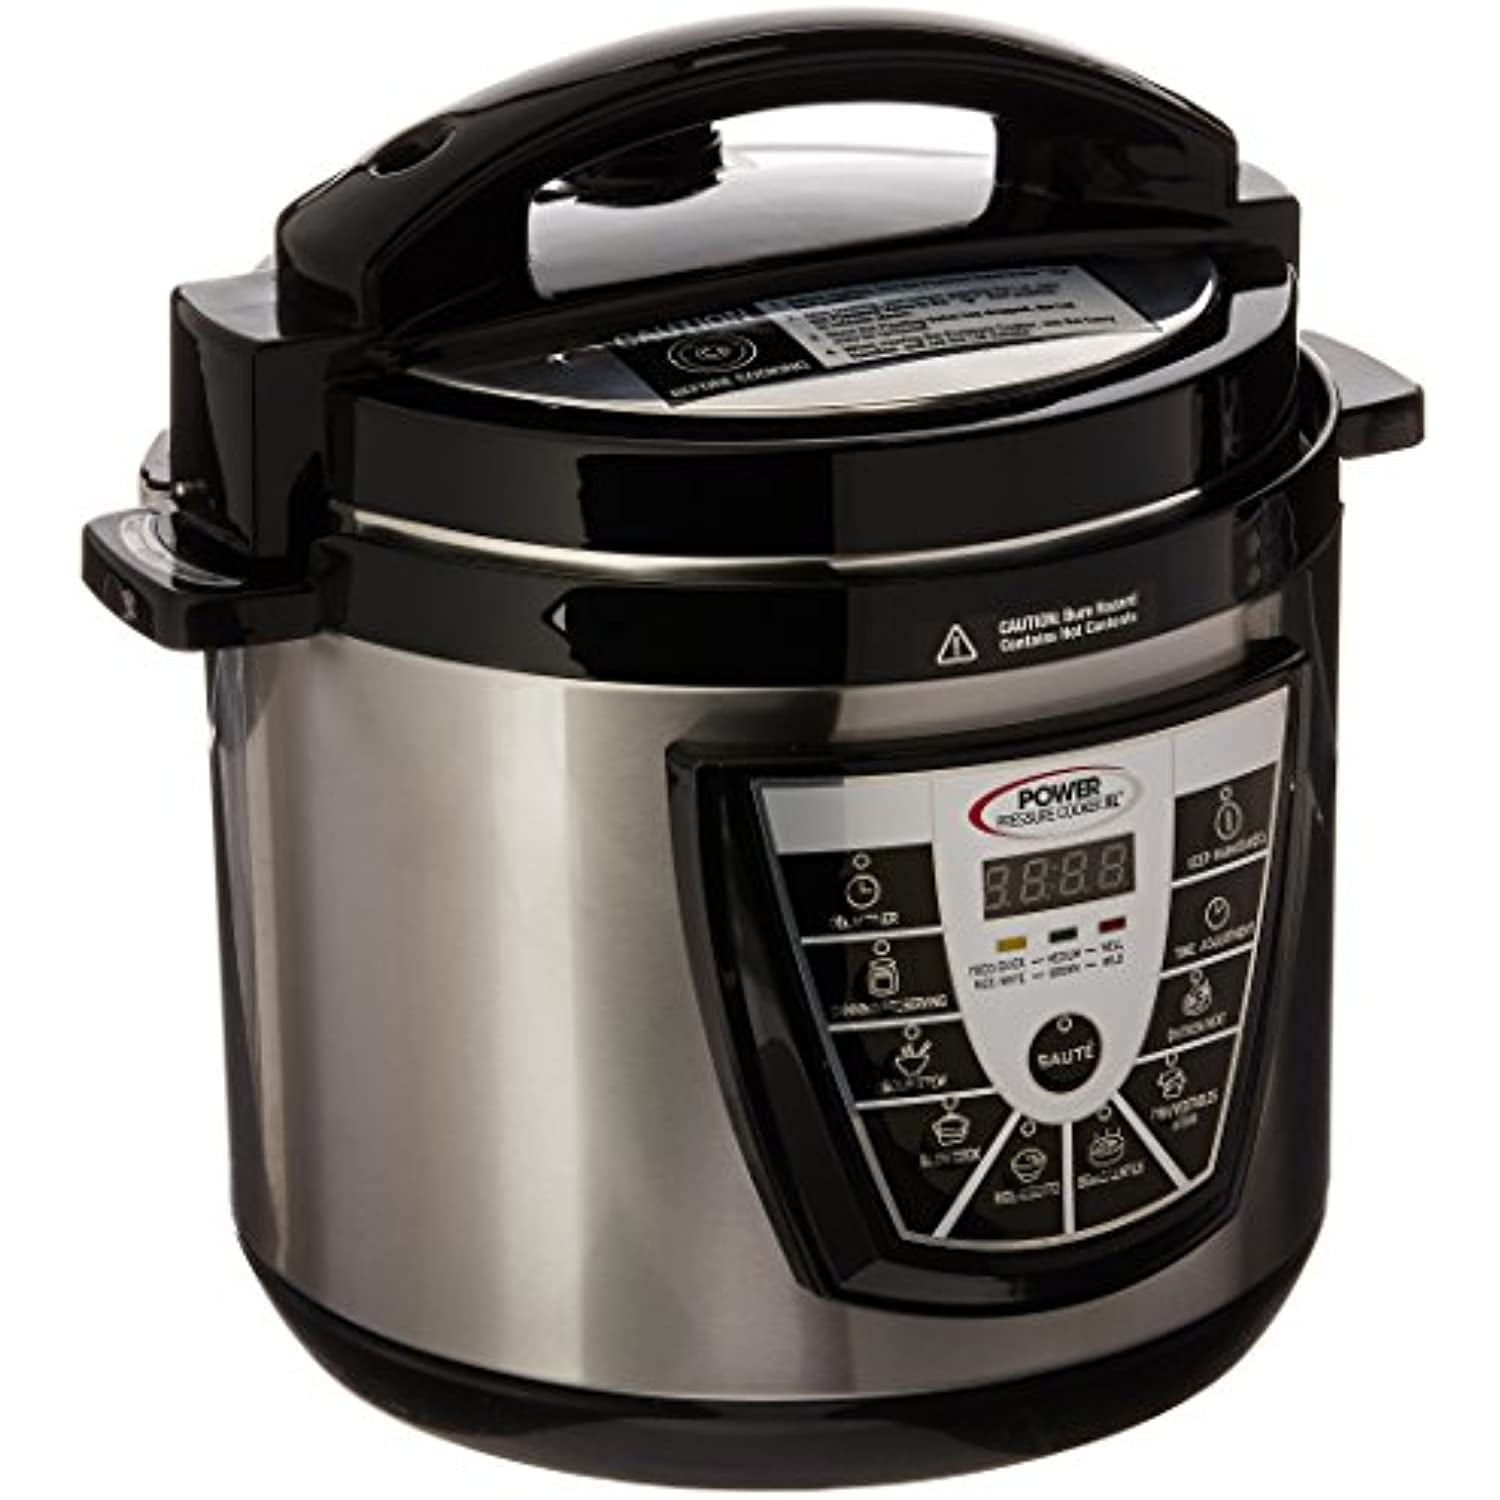 Power Pressure Cooker XL Digital 8 qt. Pressure Cooker w/ Dual Racks